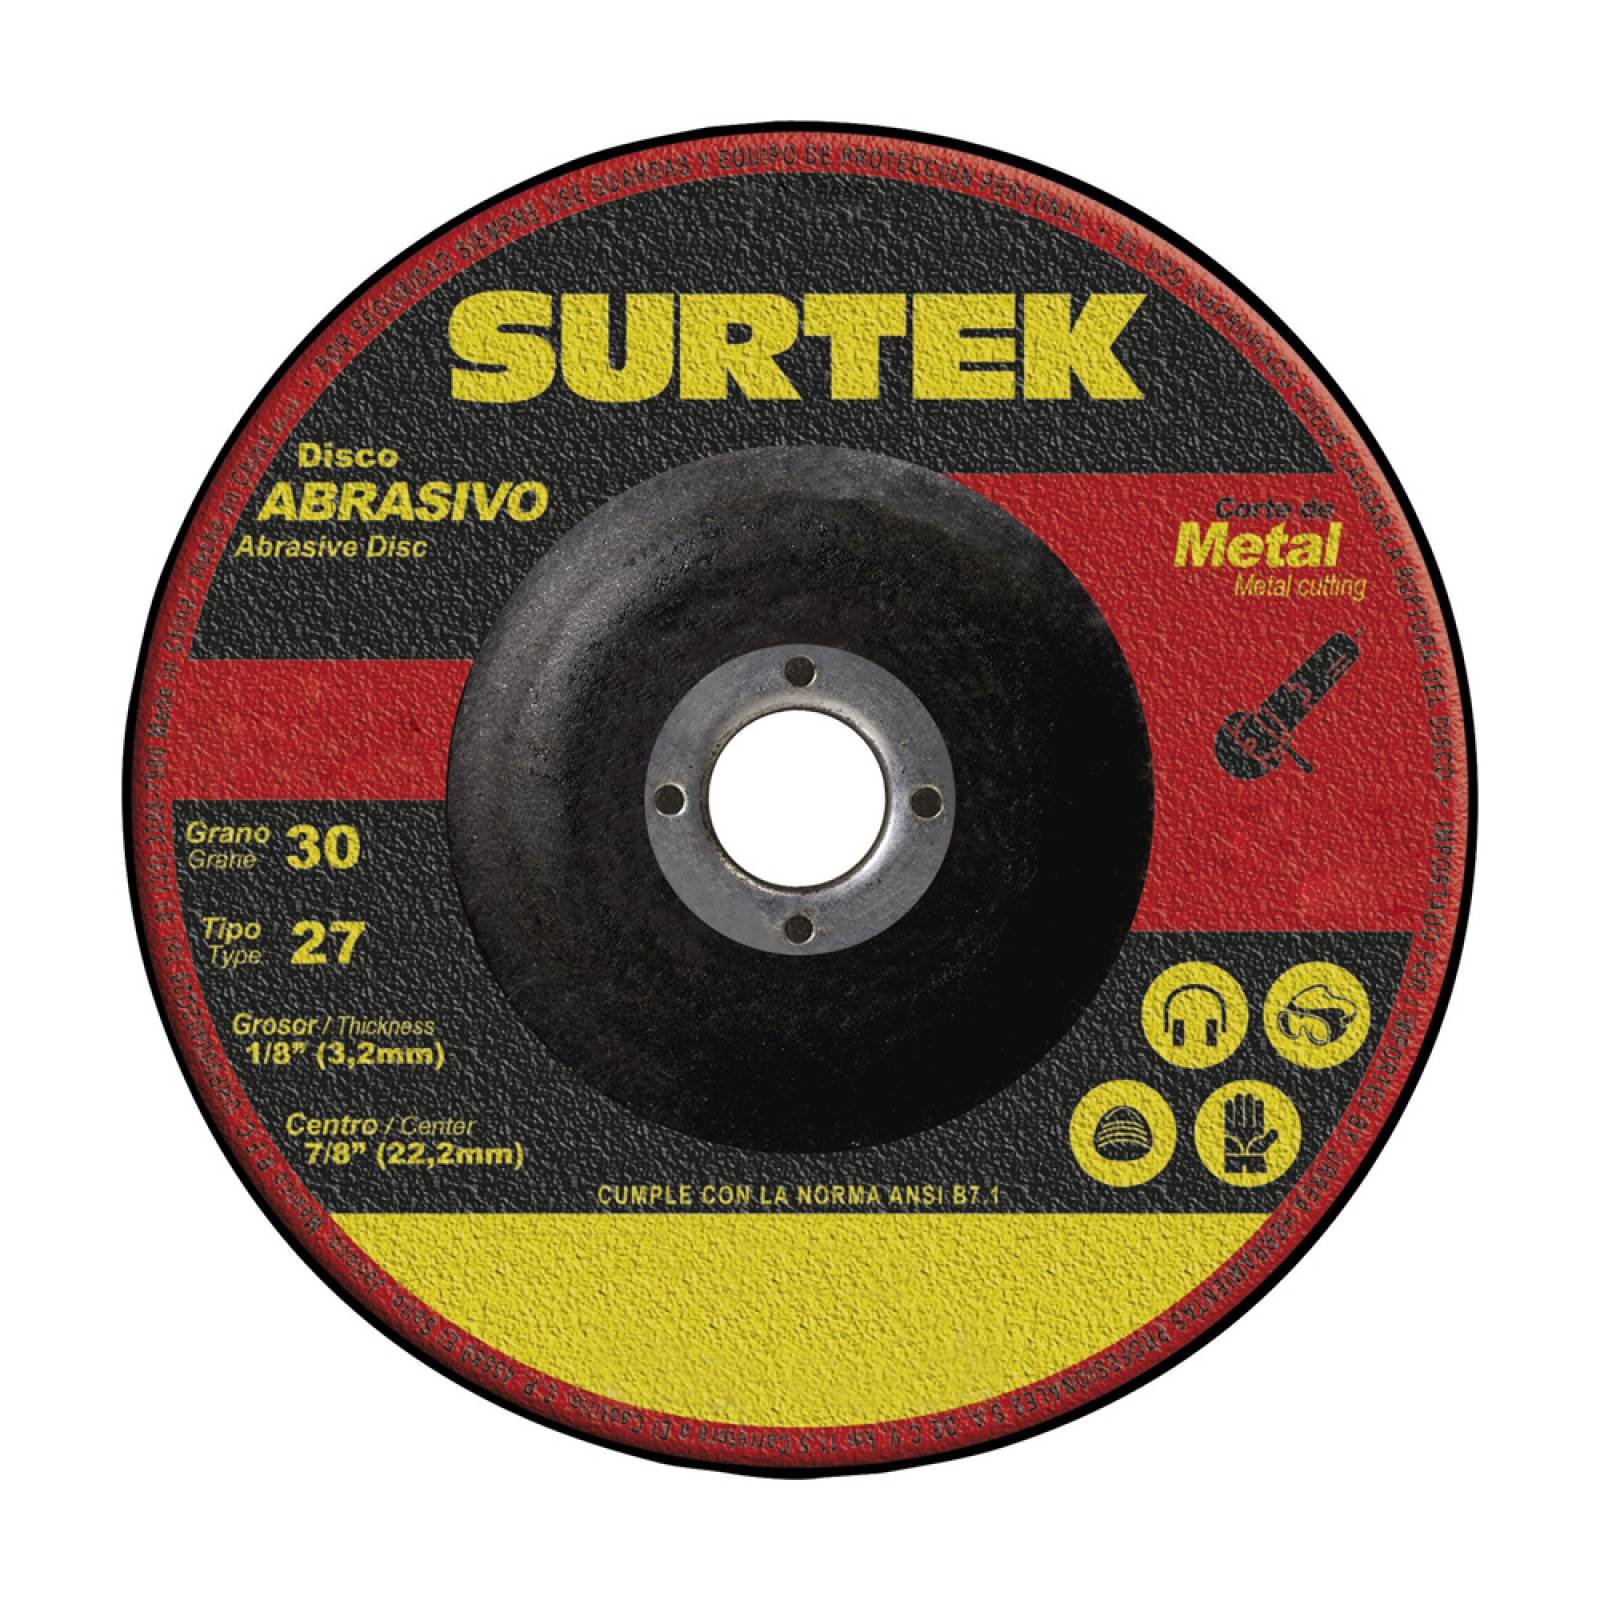 Disco T/27 Metal 7x1/8 Pulgadas 123326 Surtek 